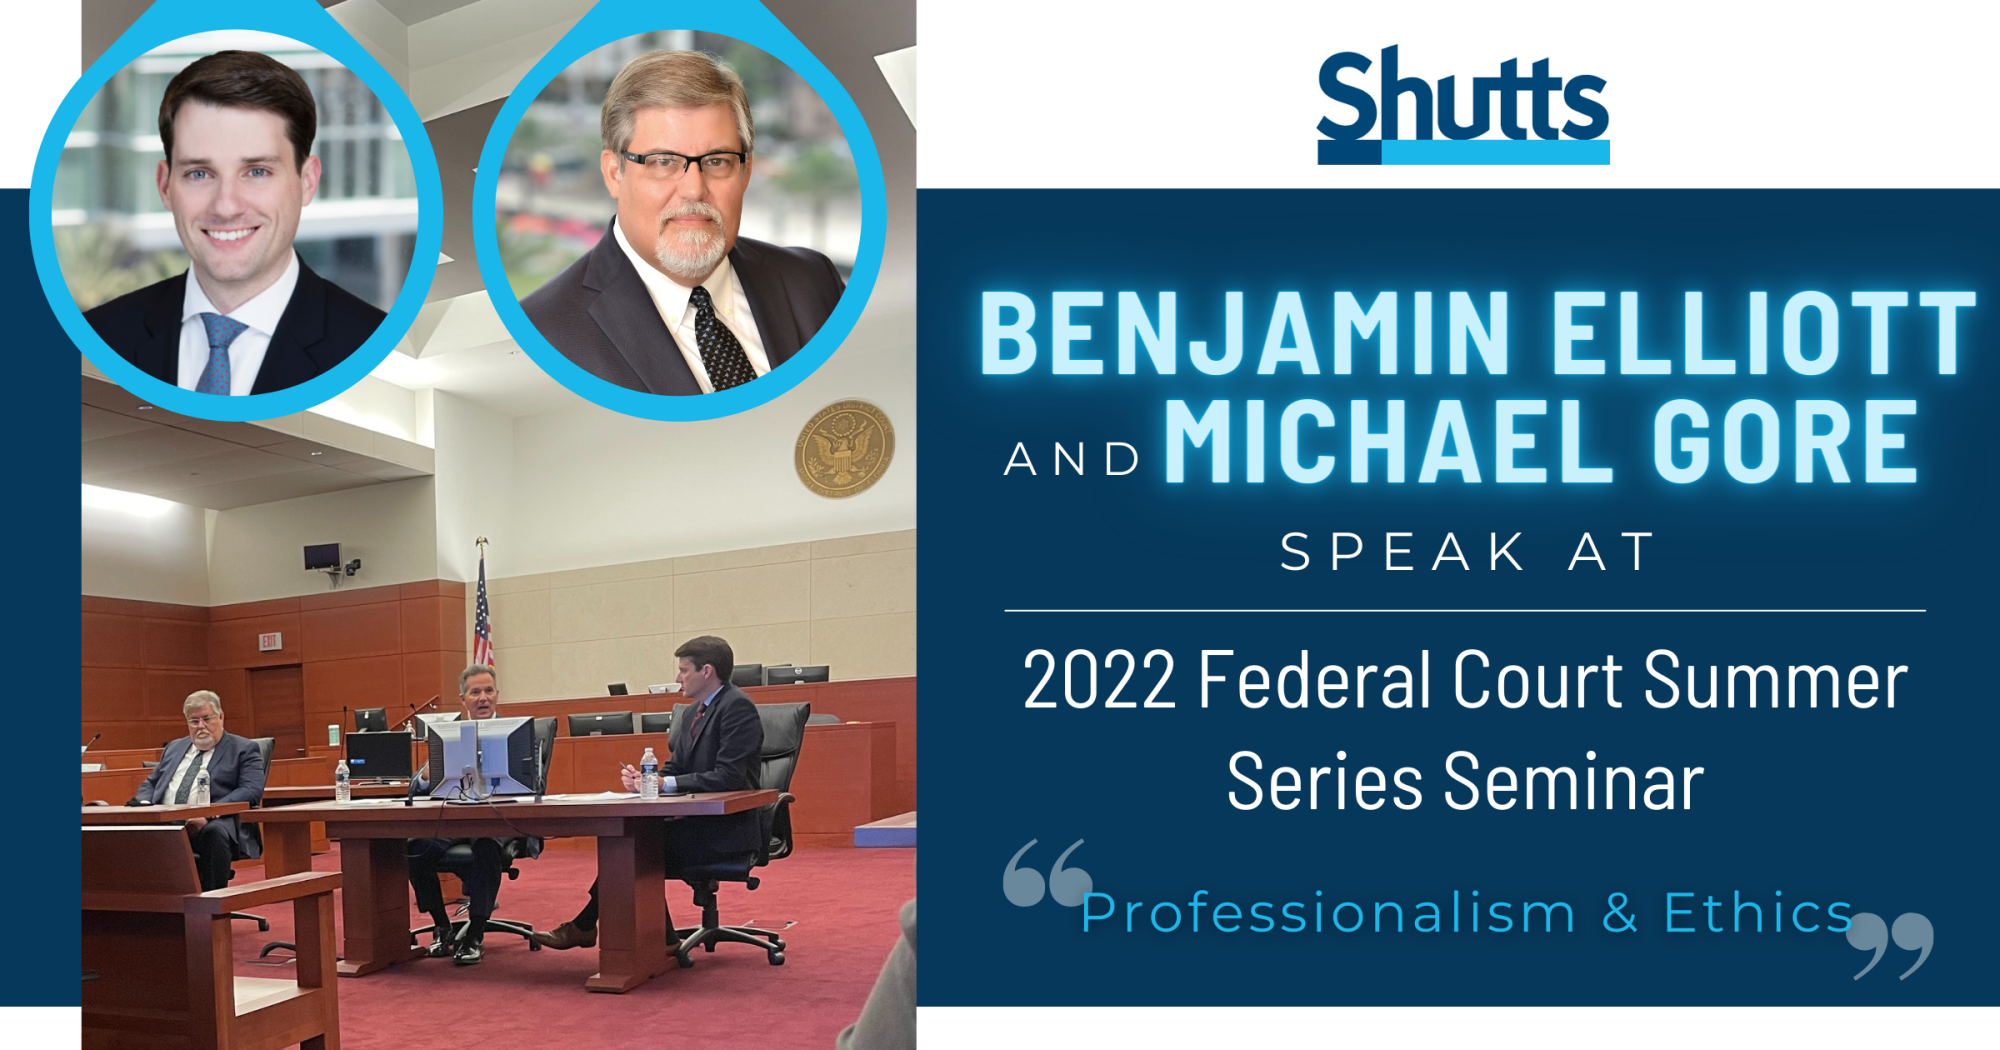 Benjamin Elliott and Michael Gore Speak at 2022 Federal Court Summer Series Seminar